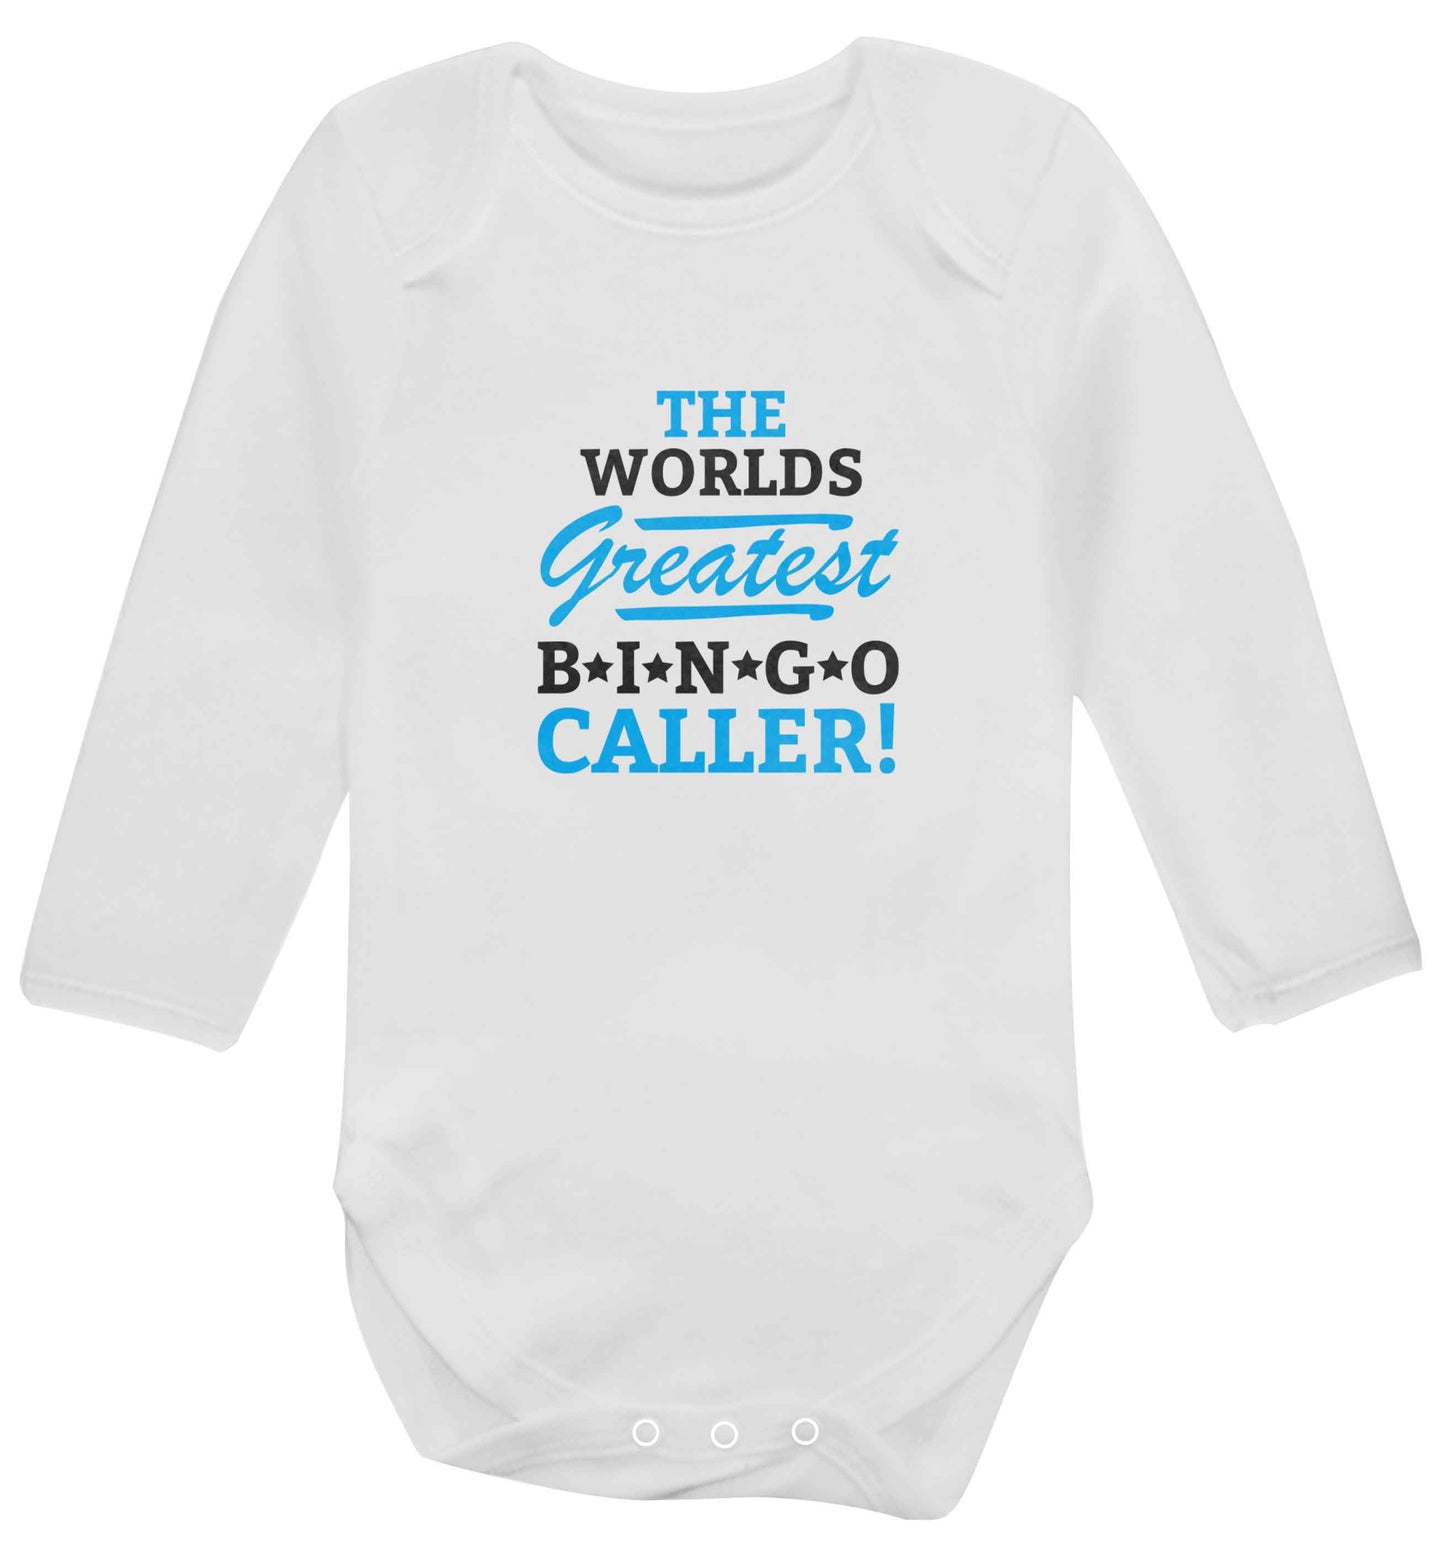 Worlds greatest bingo caller baby vest long sleeved white 6-12 months